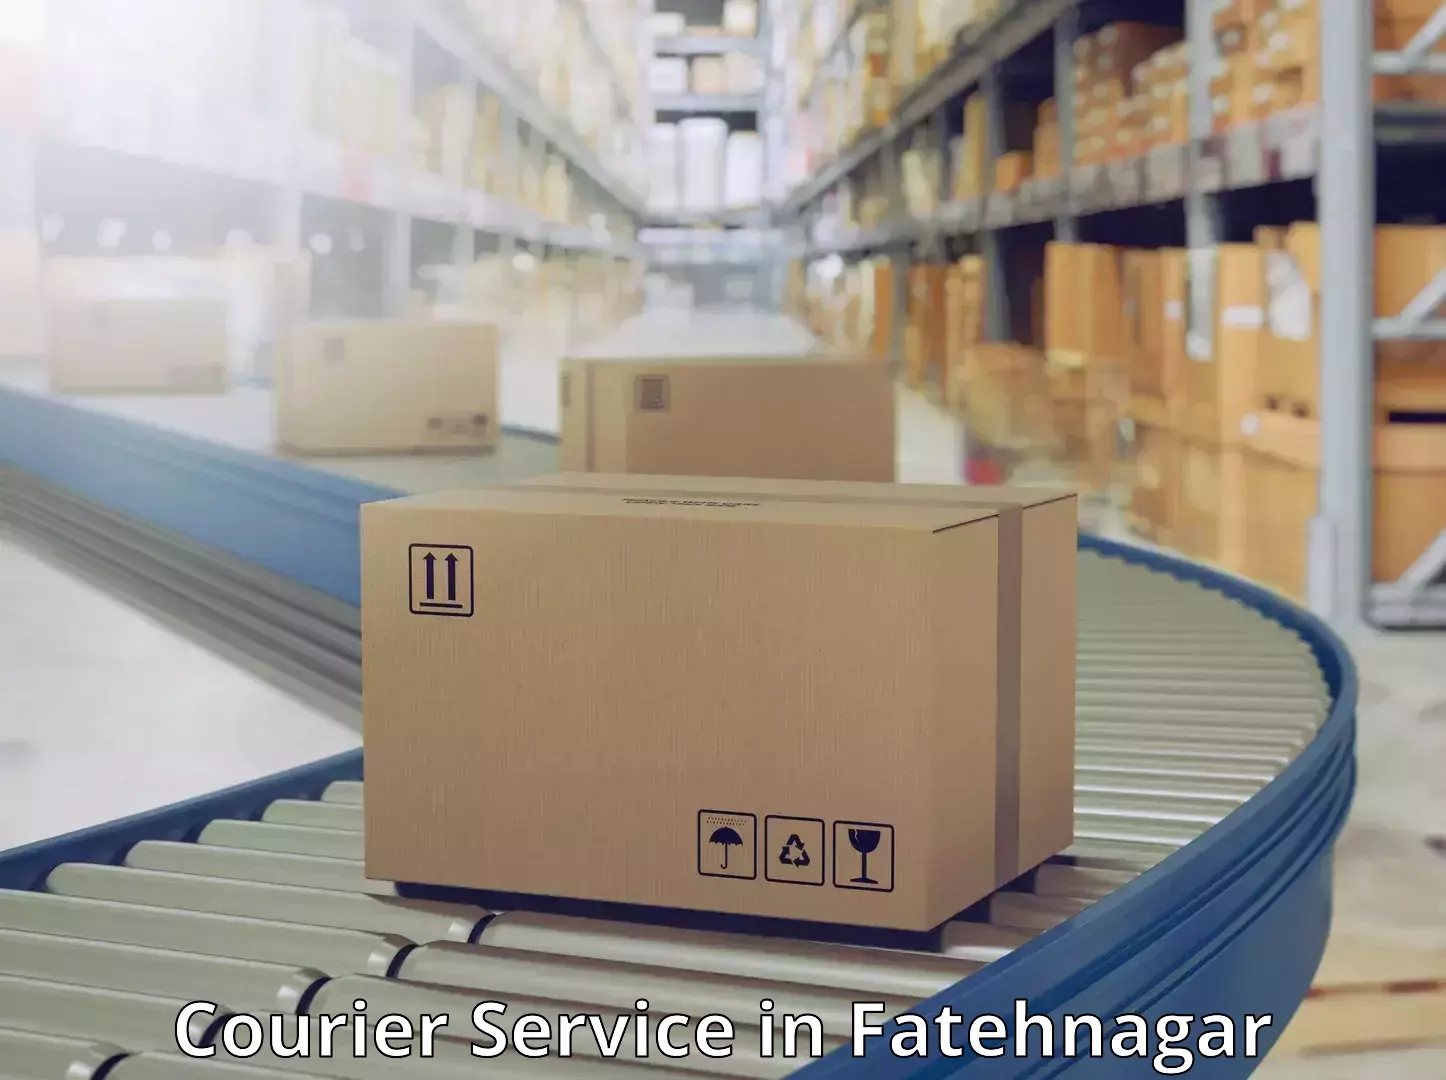 Customizable shipping options in Fatehnagar